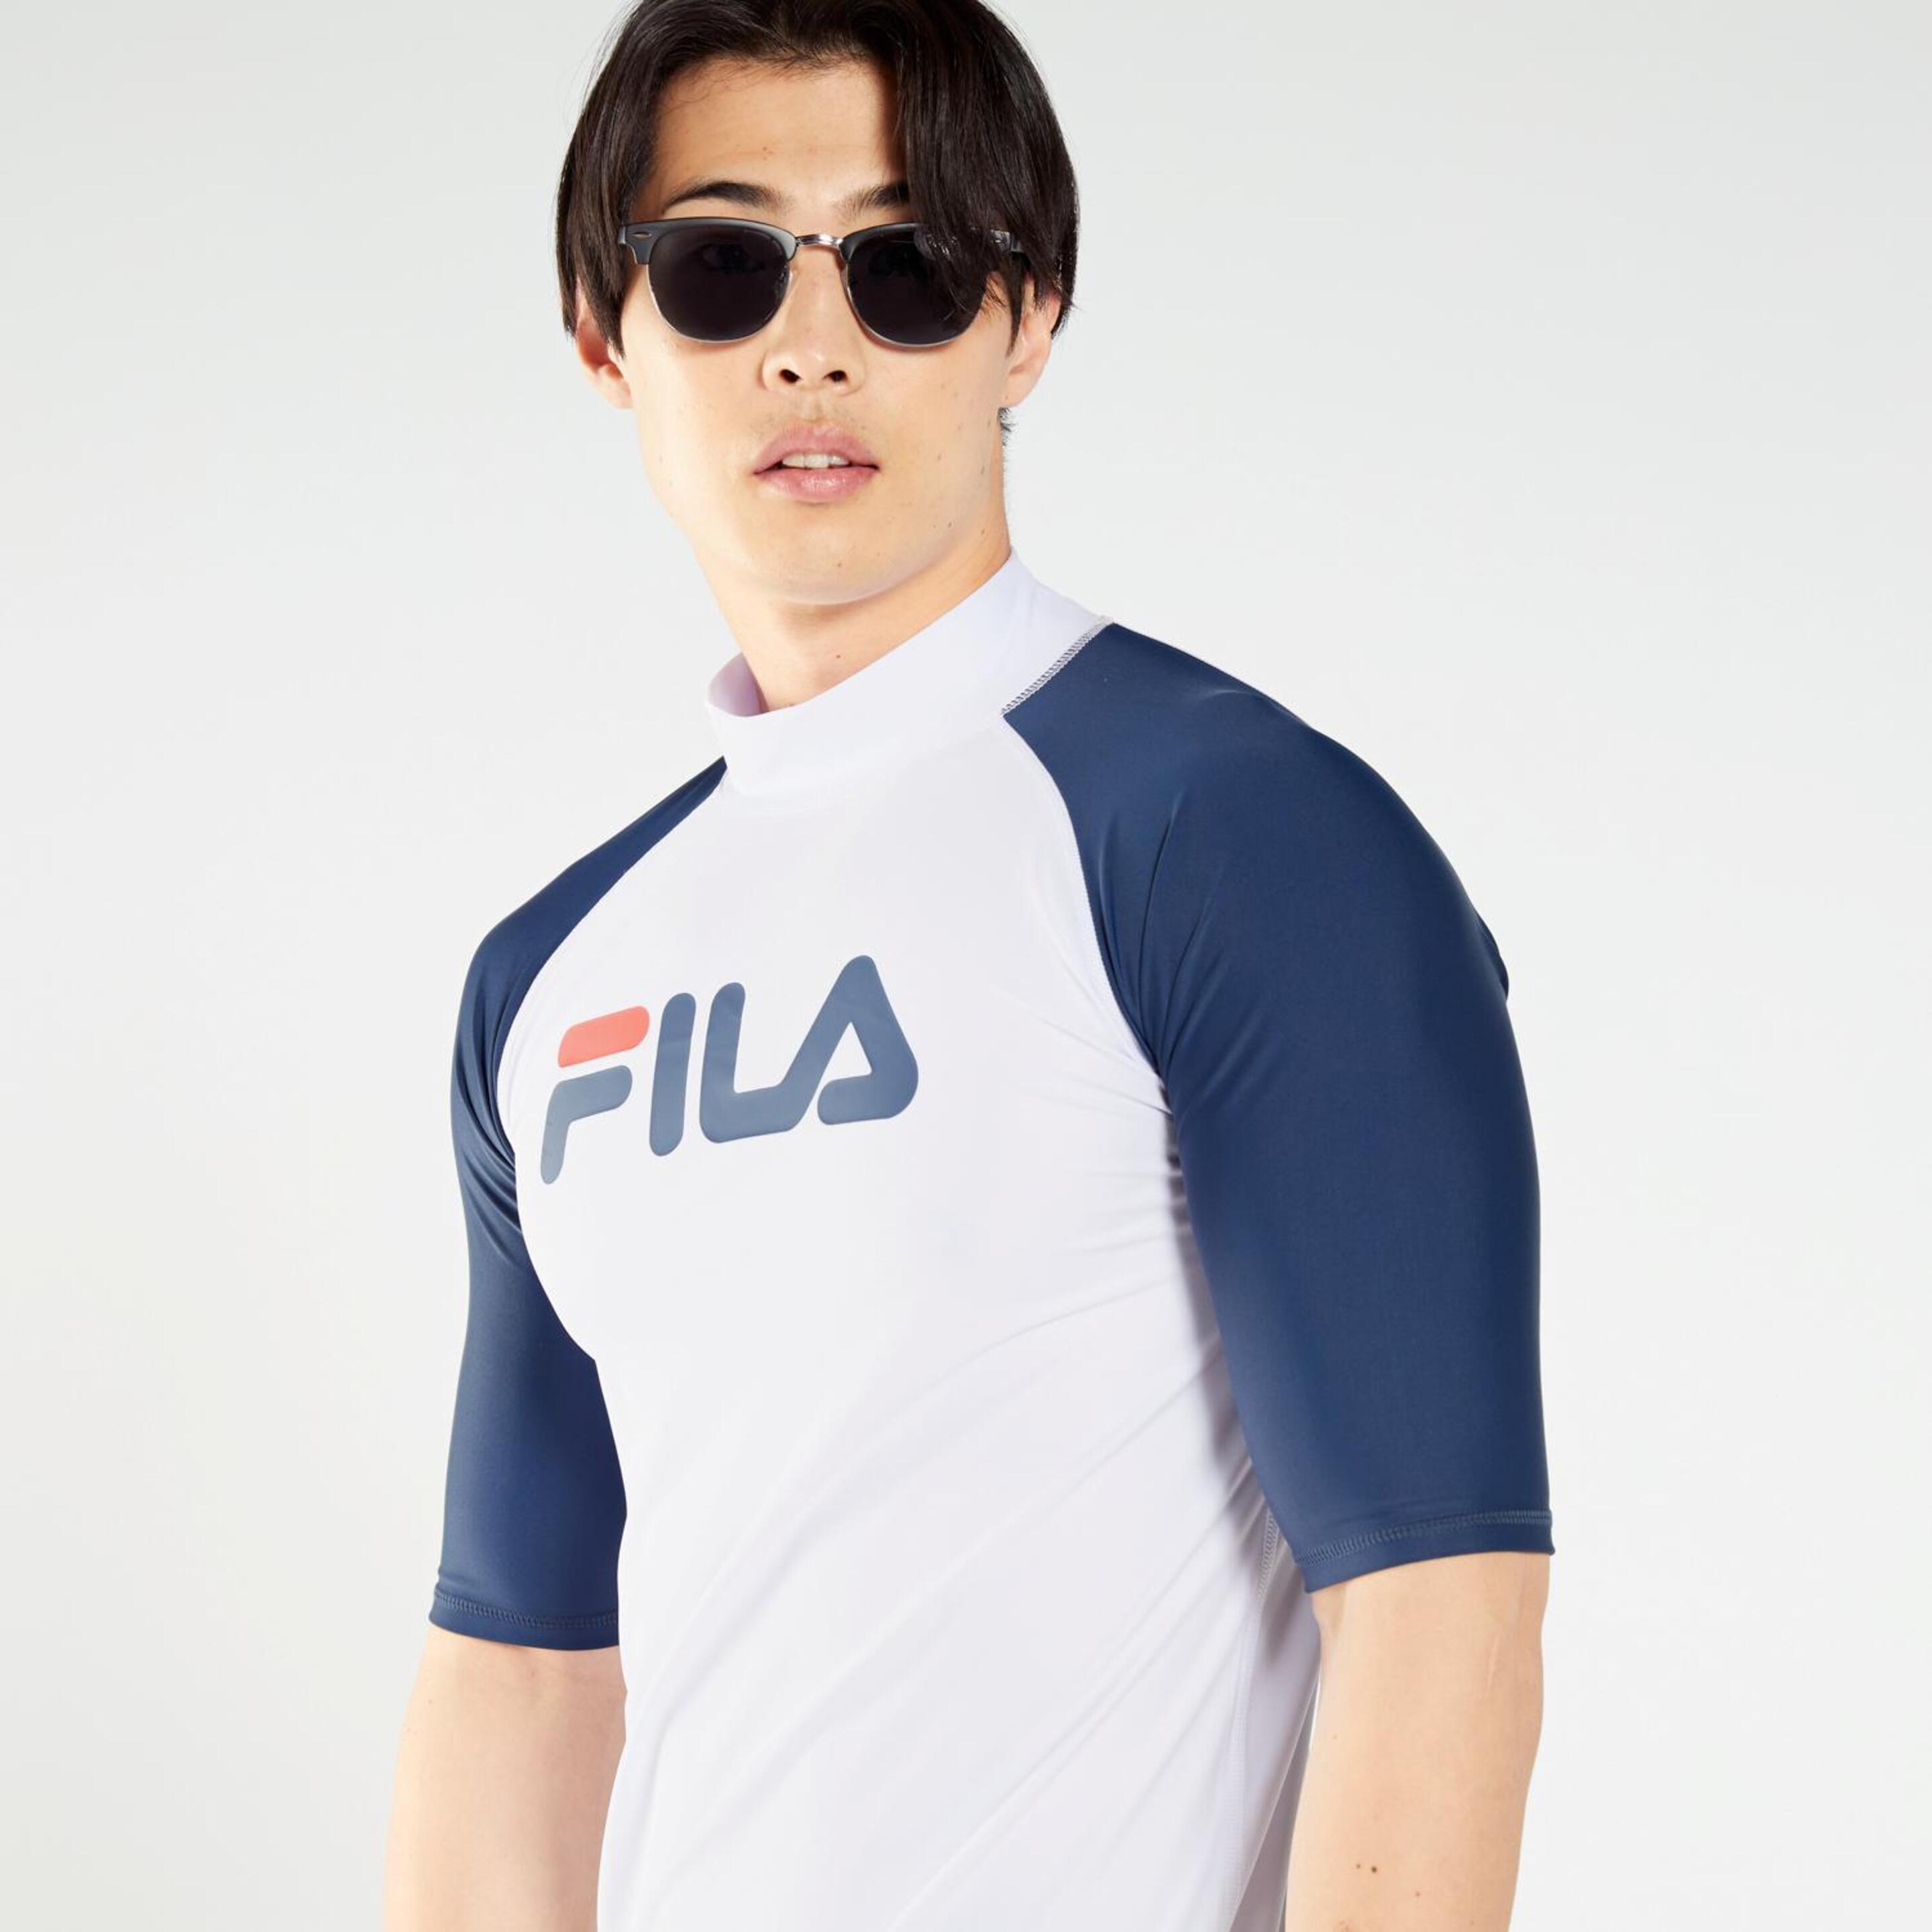 Fila Surf - Blanco - Camiseta Surf Hombre